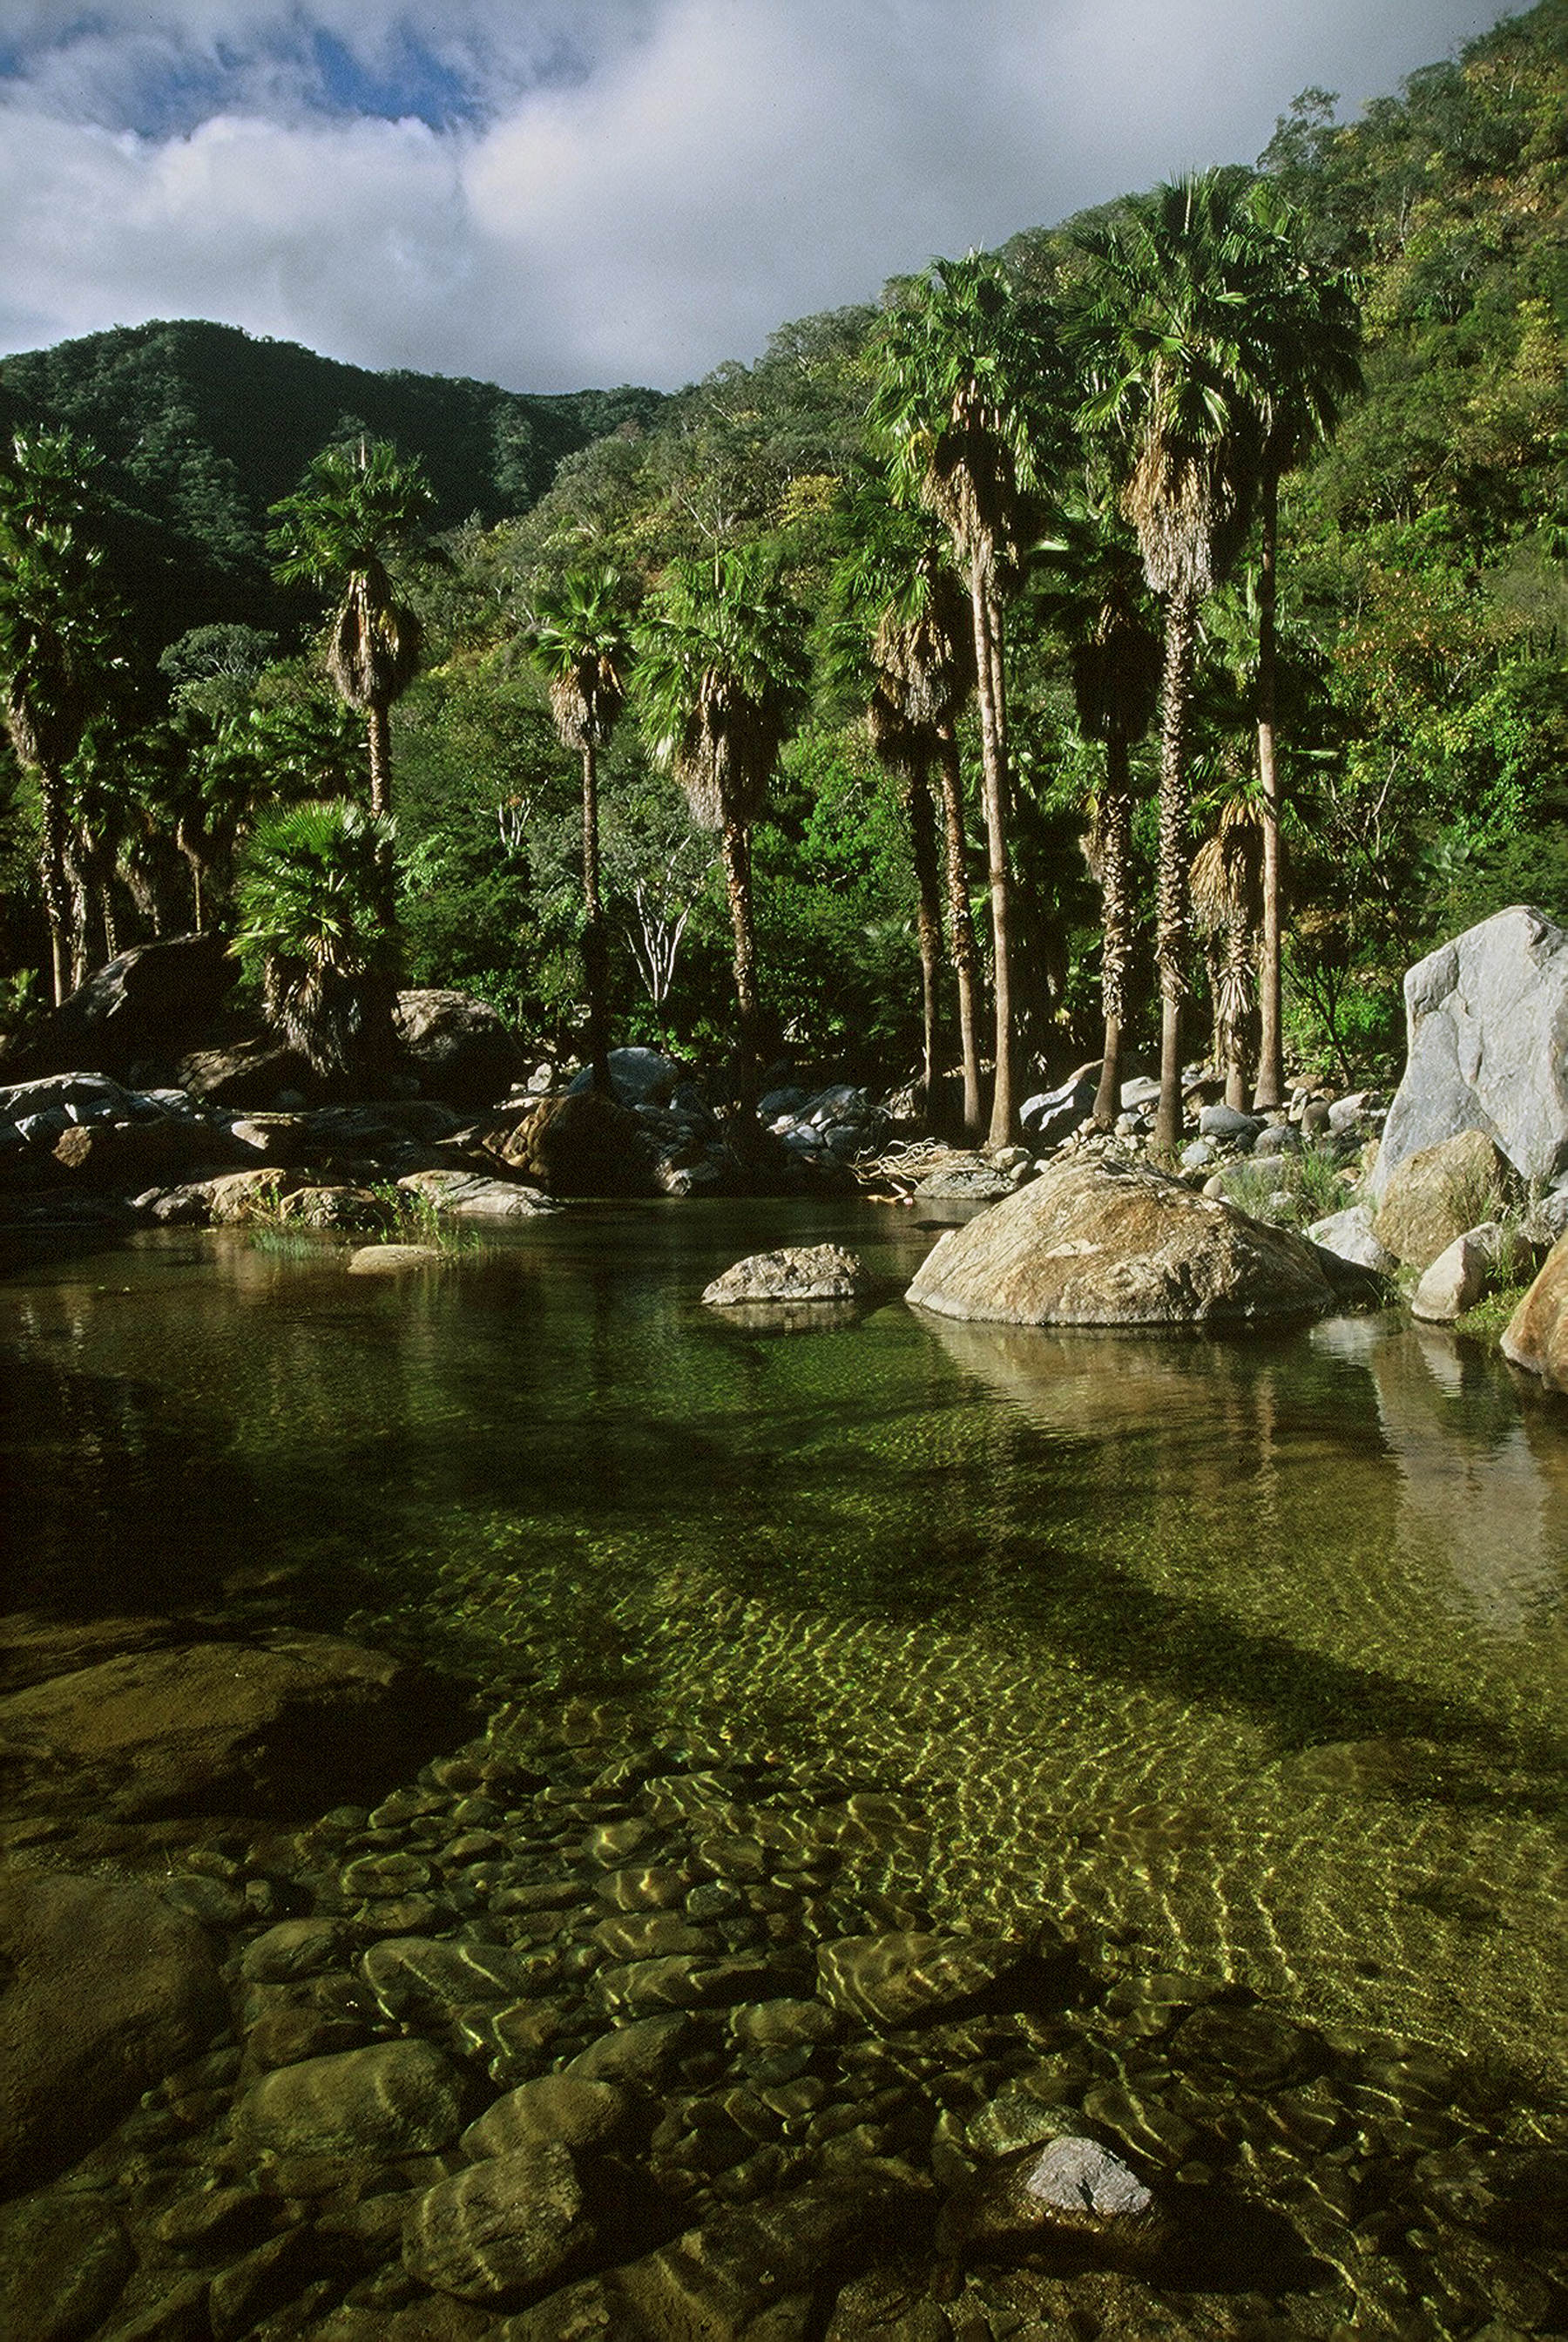 Sierra la Laguna